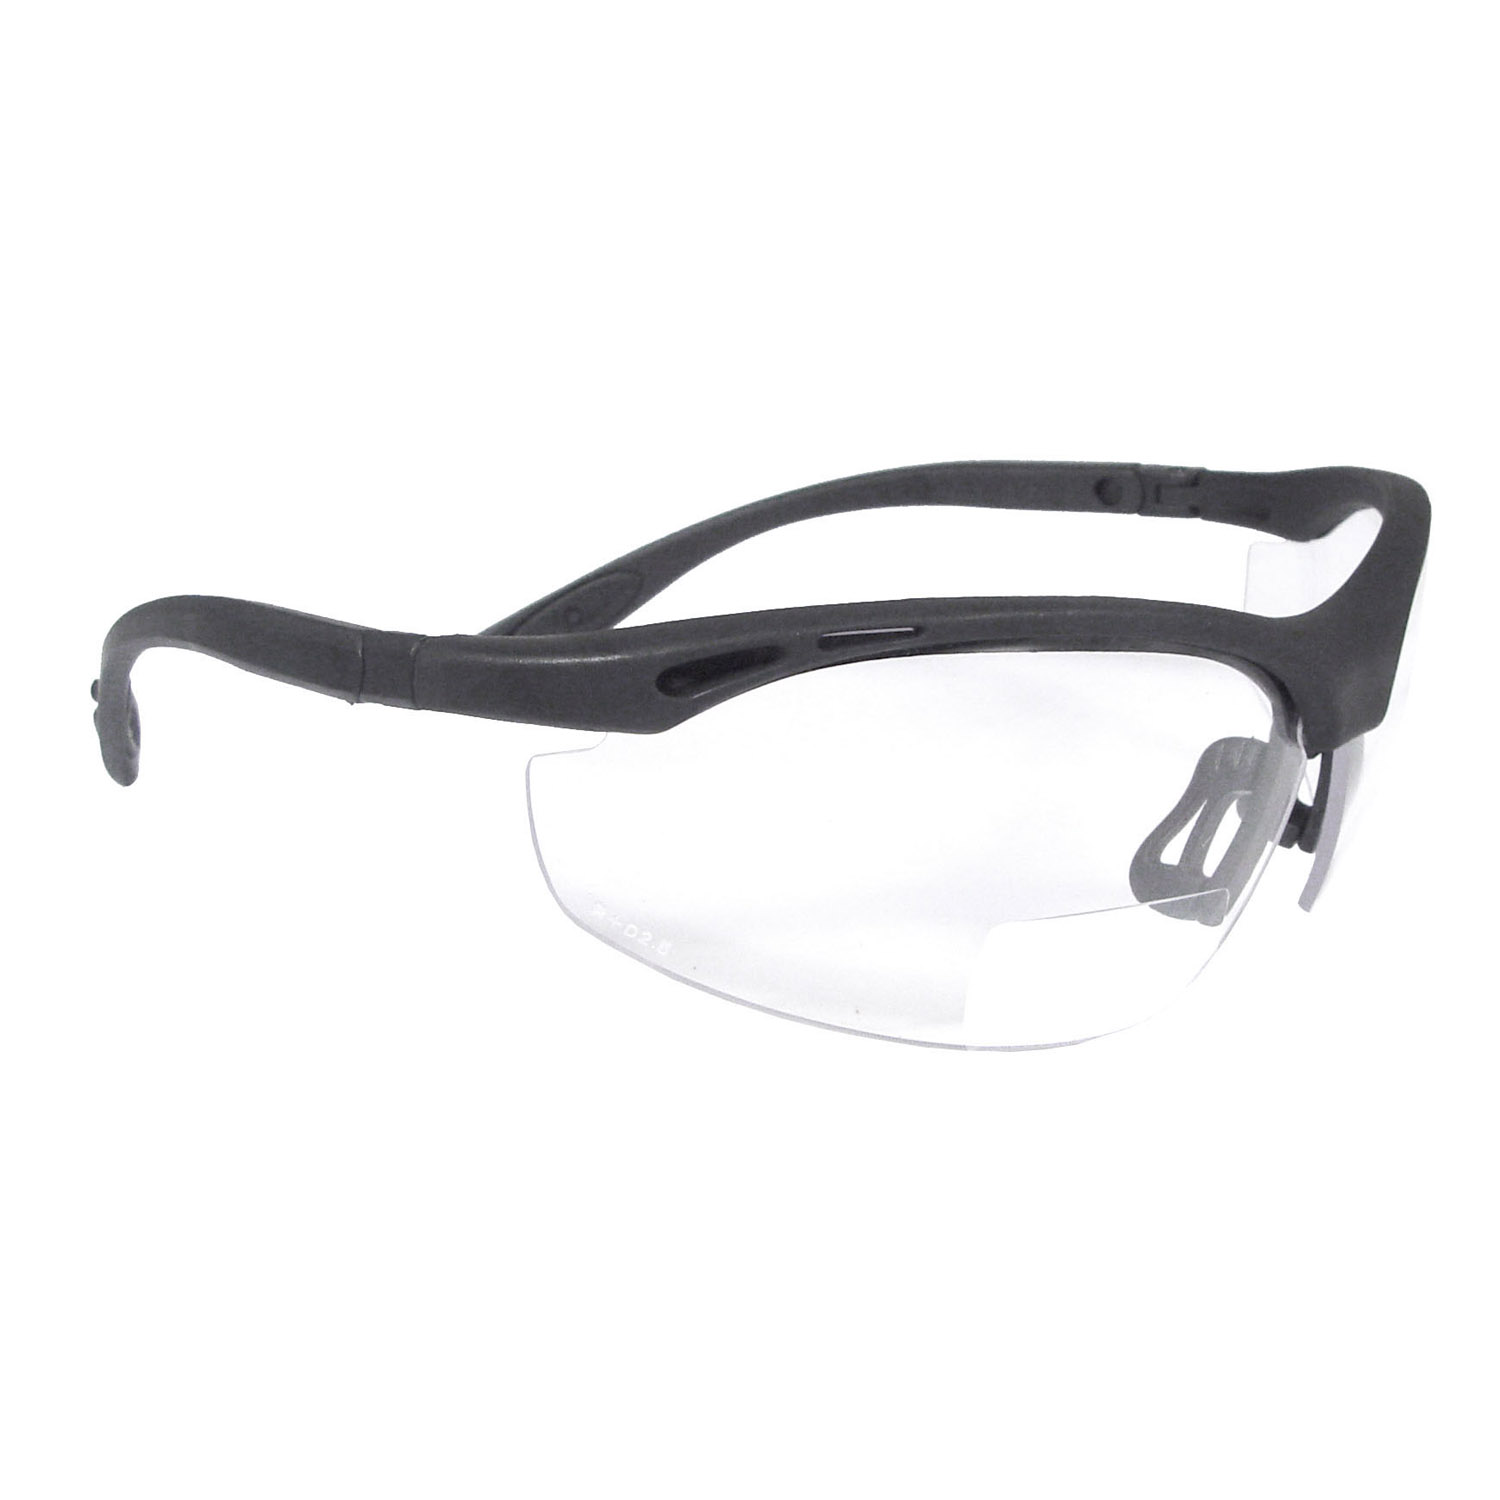 Cheaters® Bi-Focal Eyewear - Black Frame - Clear Lens - 1.0 Diopter